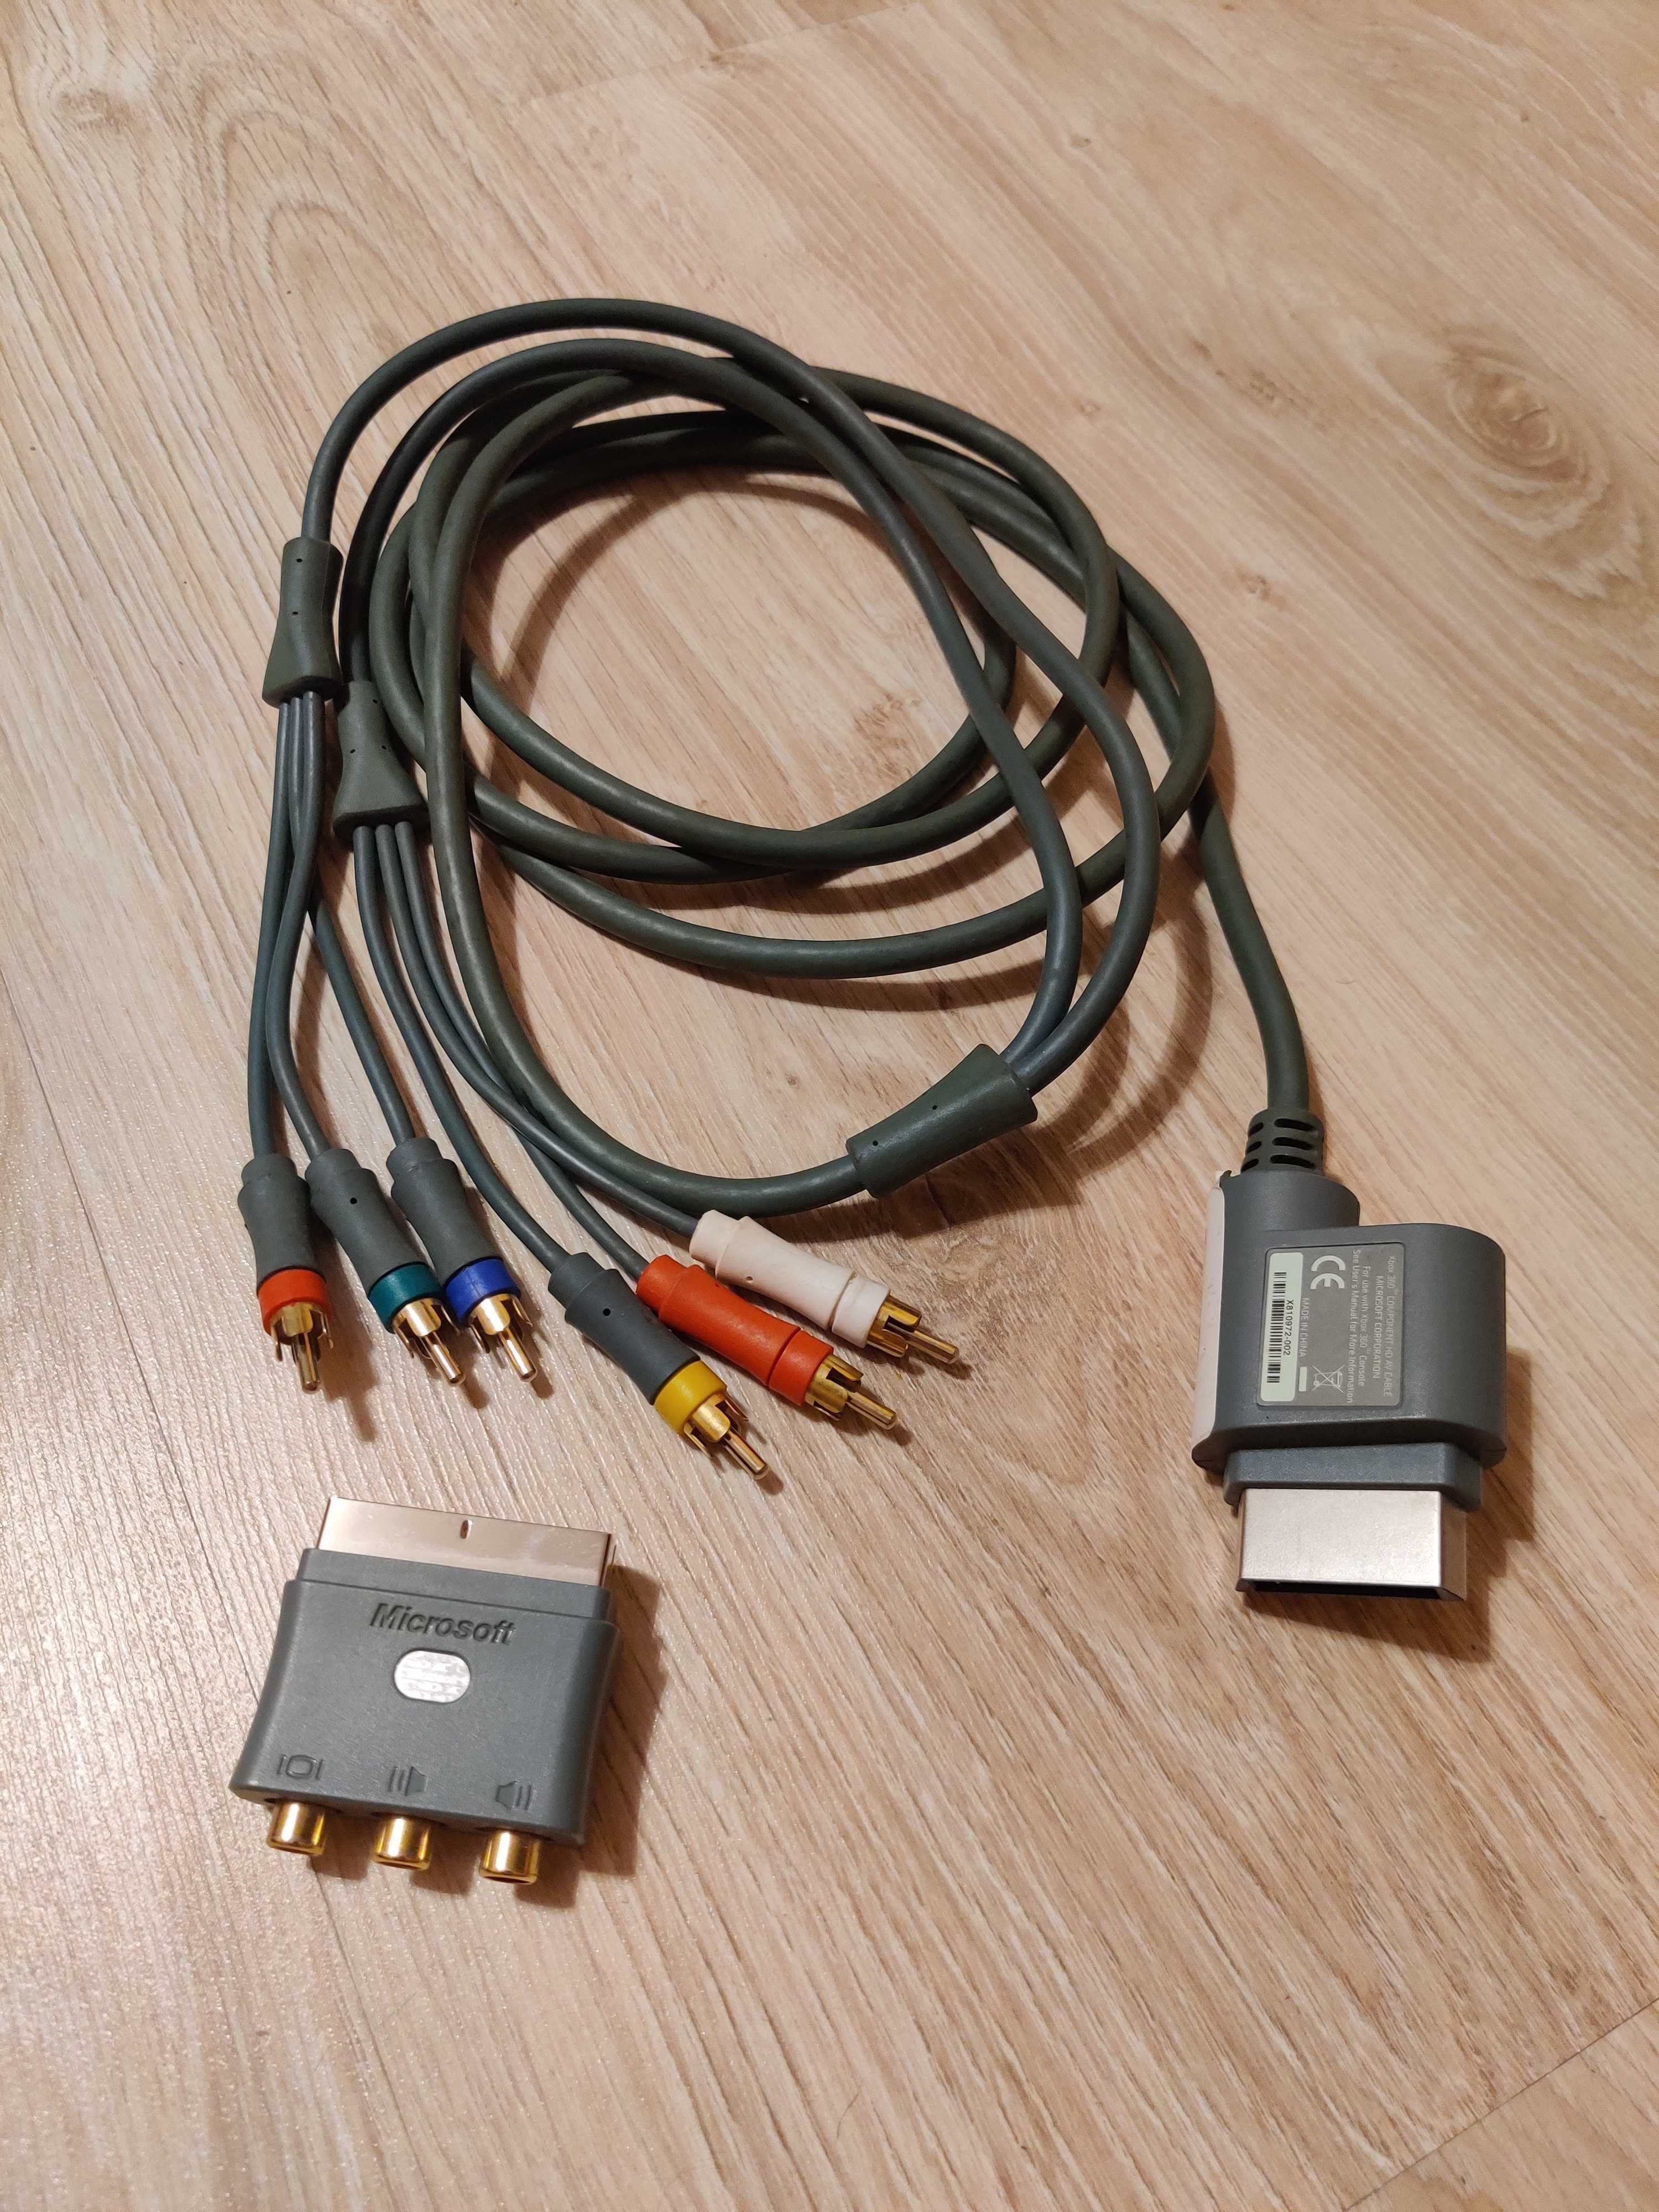 Oryginalny kabel przewód Microsoft xbox360 Component HD AV